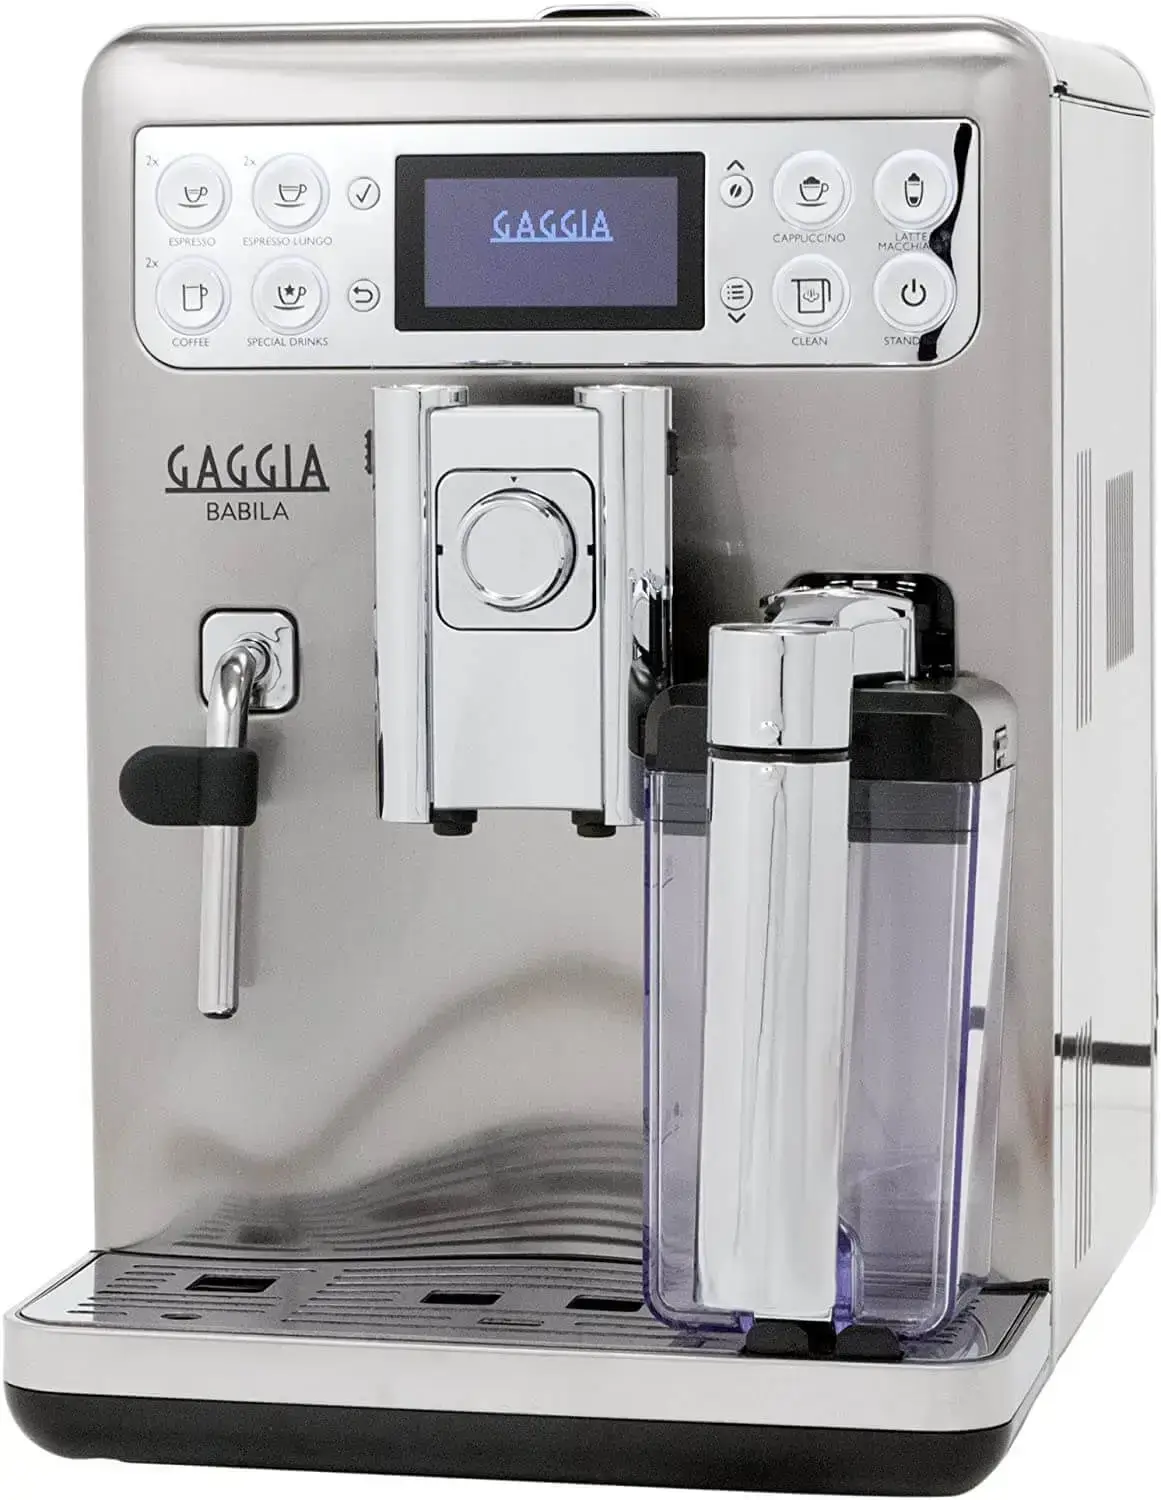 Gaggia-Babila-RI9700-64-espresso-Machine_-Stainless-Steel